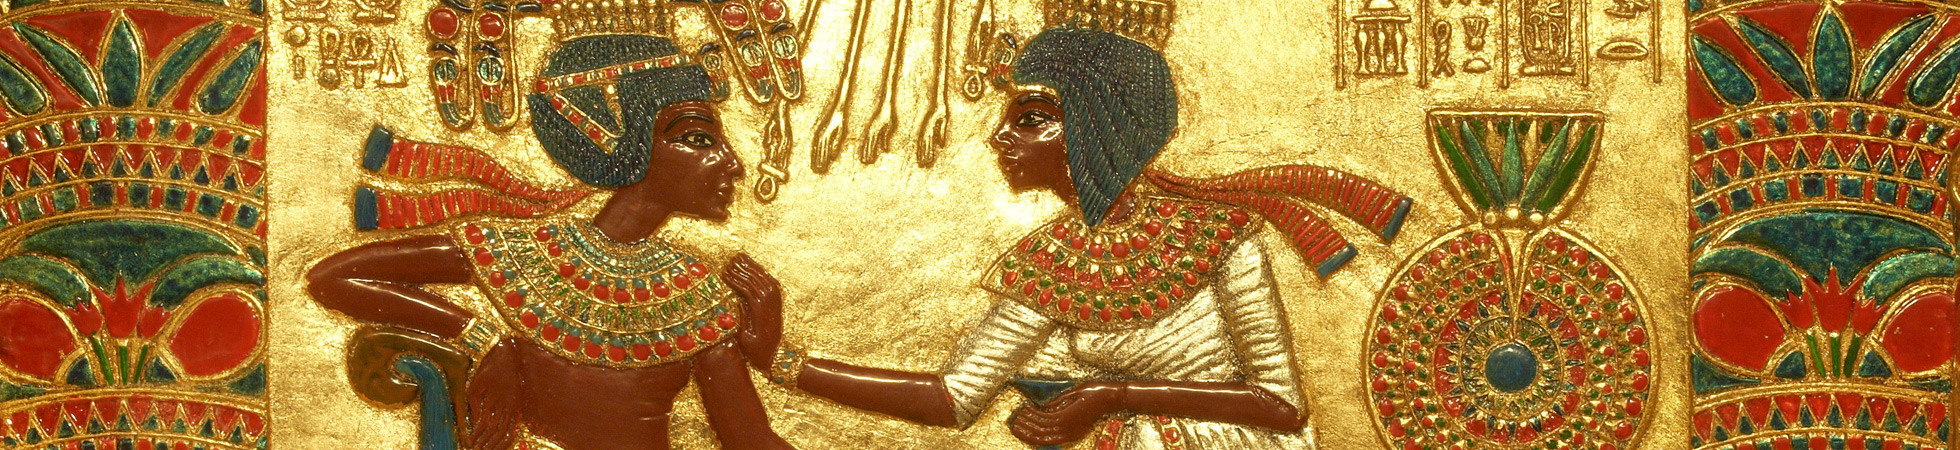 Life & Death of Tutankhamun